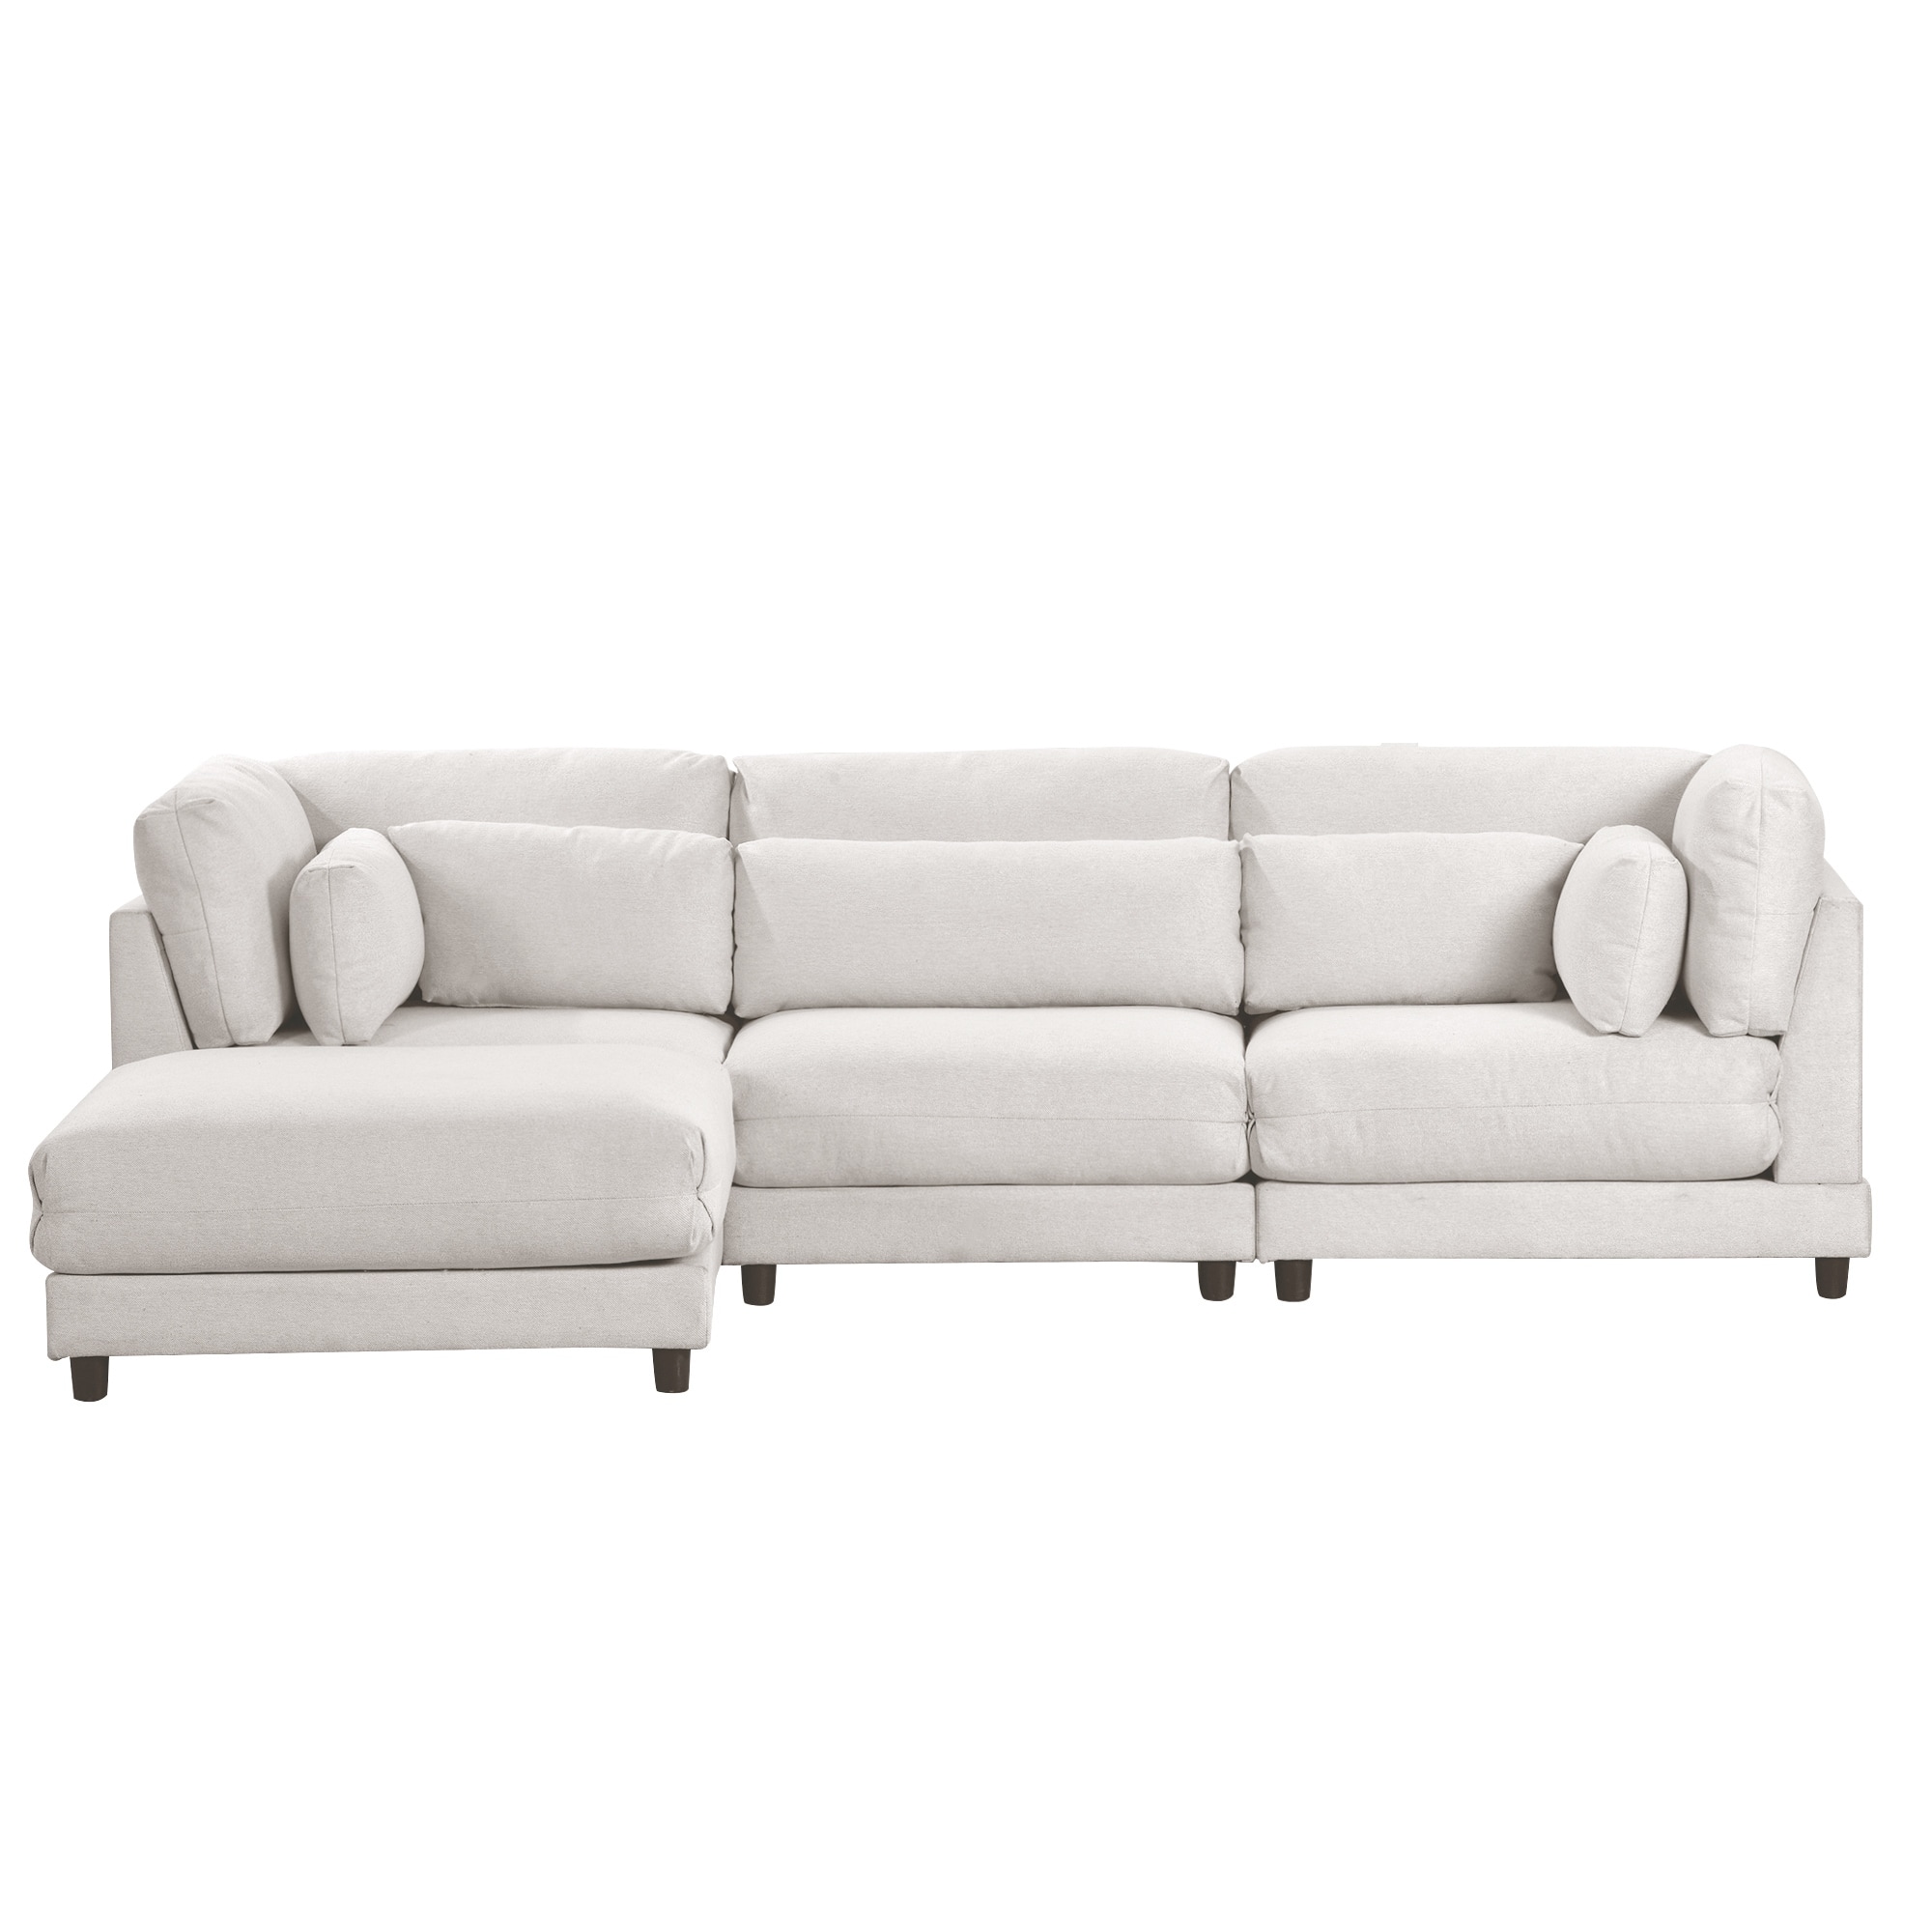 Modular Sectional Sofa Set with Removable Ottoman, 2 Pieces Deep Seat ...